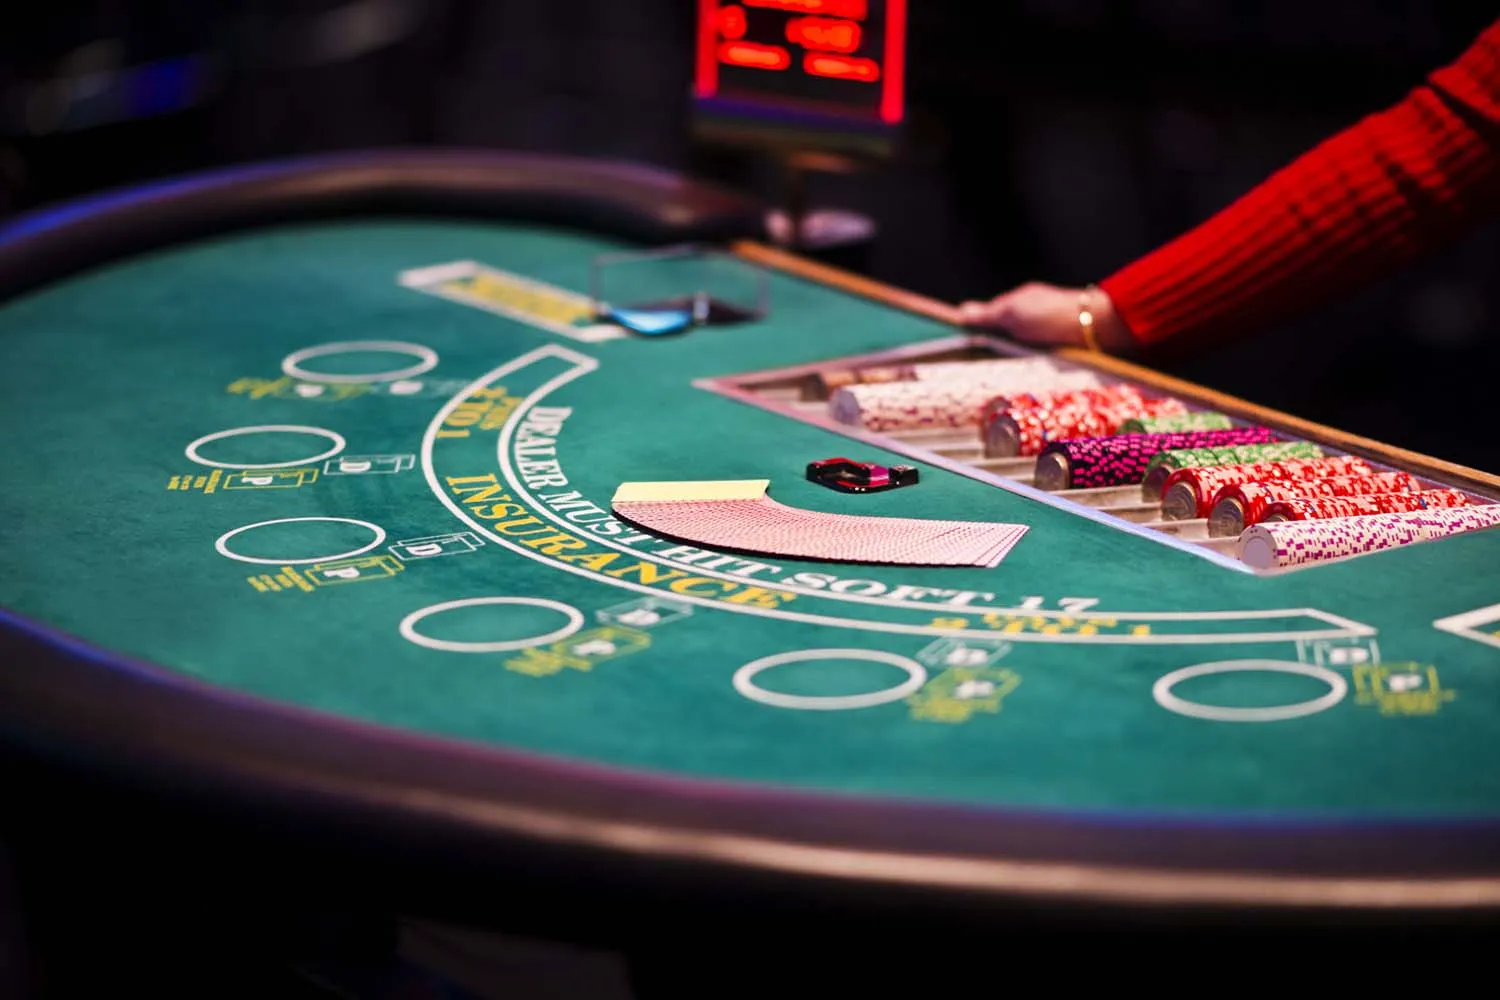 best odds casino games